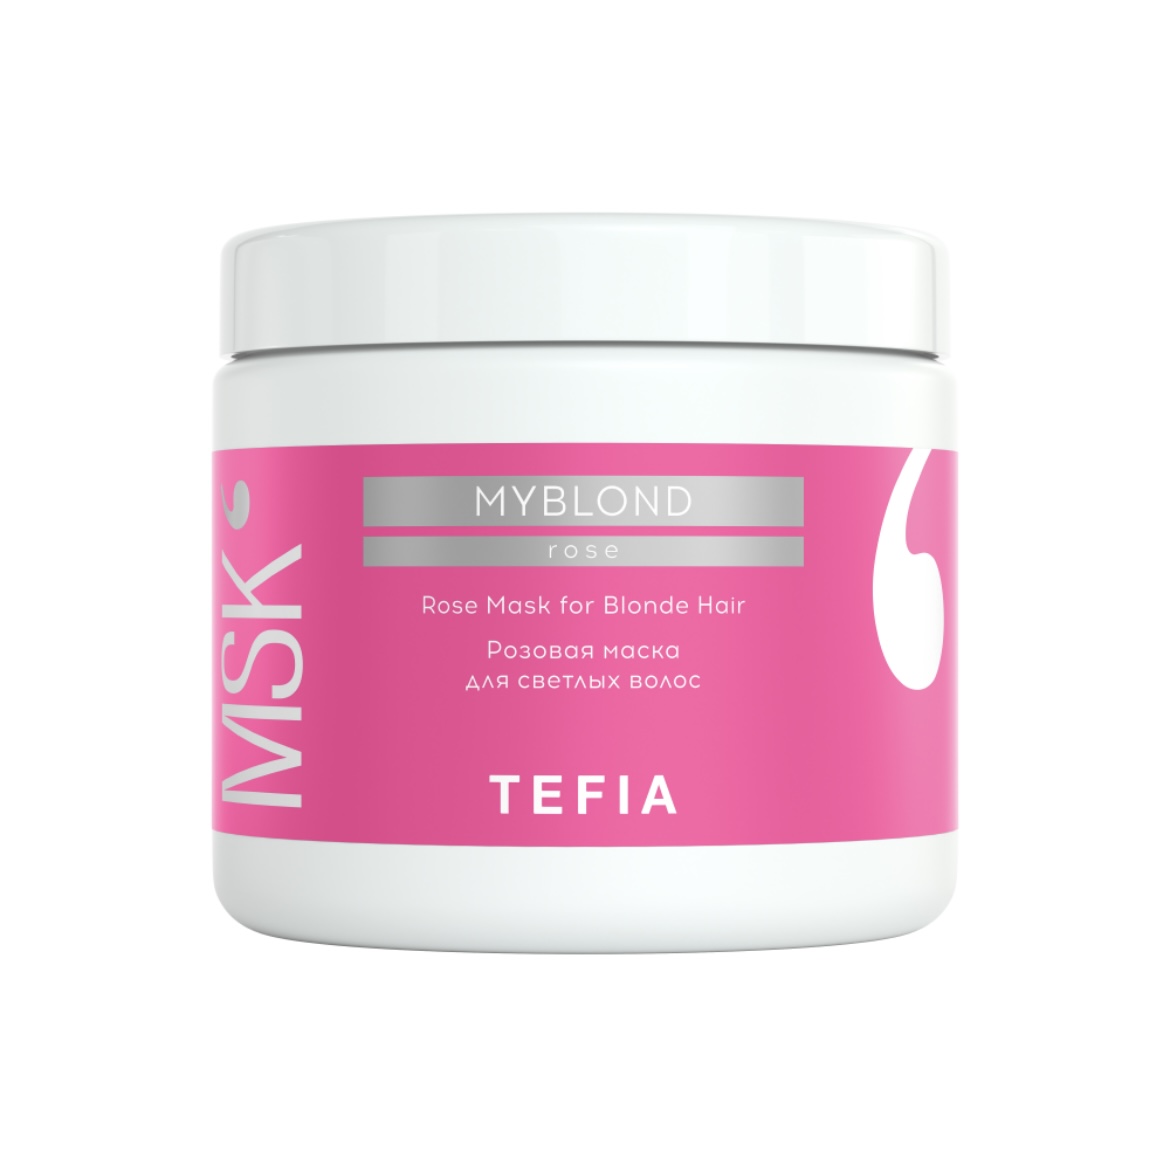 TEFIA, Розовая маска для светлых волос Myblond, 500 мл.